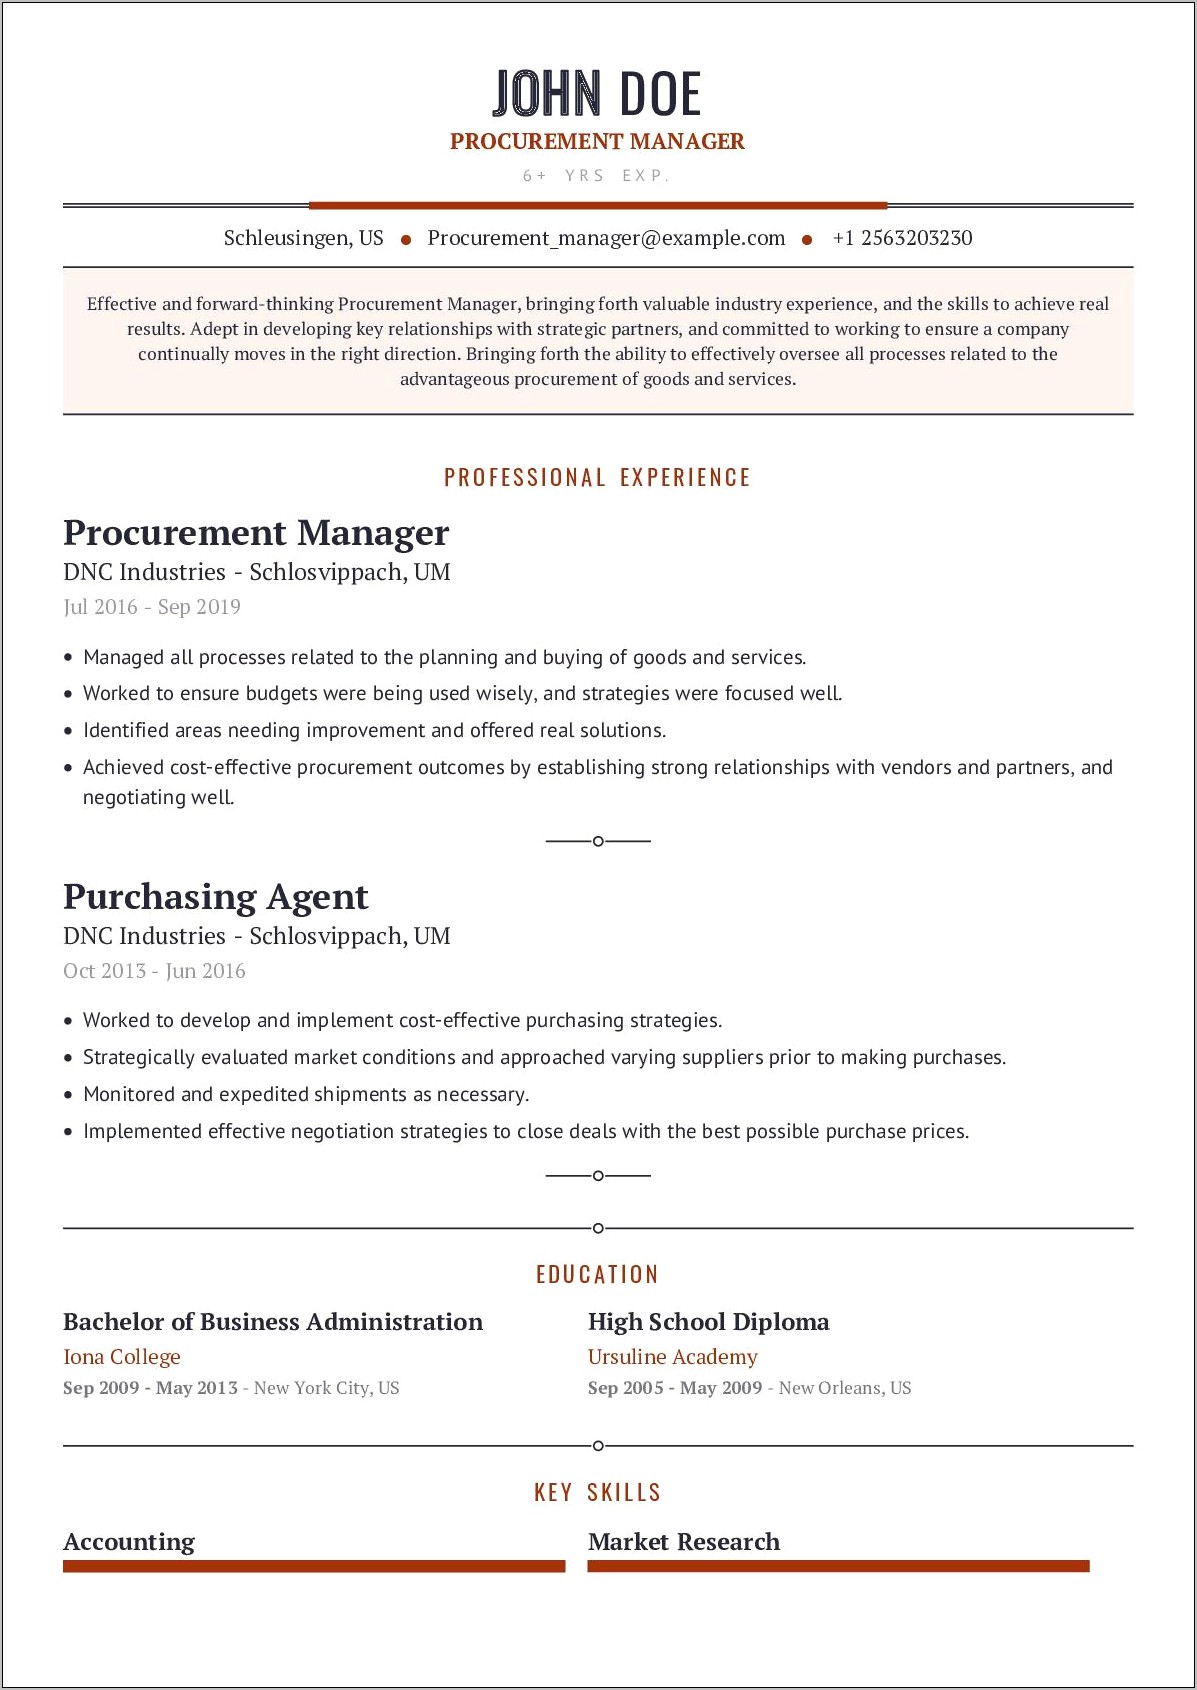 Resume Profile Sample Purchasing Agent